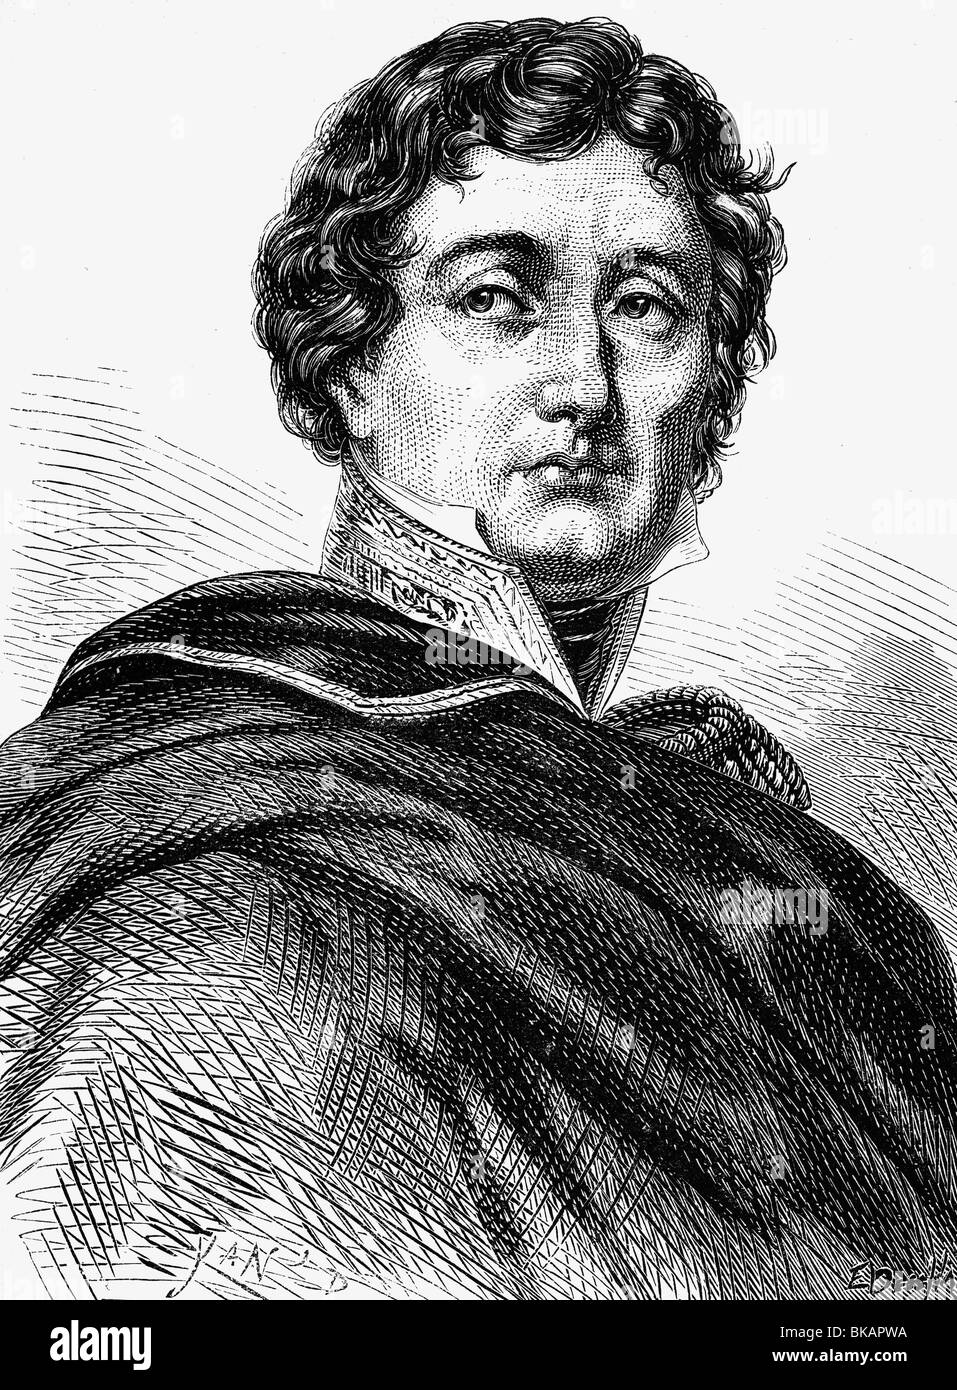 Soult, Nicolas-Jean-de-Dieu, 29.3.1769 - 26.11.1851, French general and politician, portrait, wood engraving, 19th century, , Stock Photo